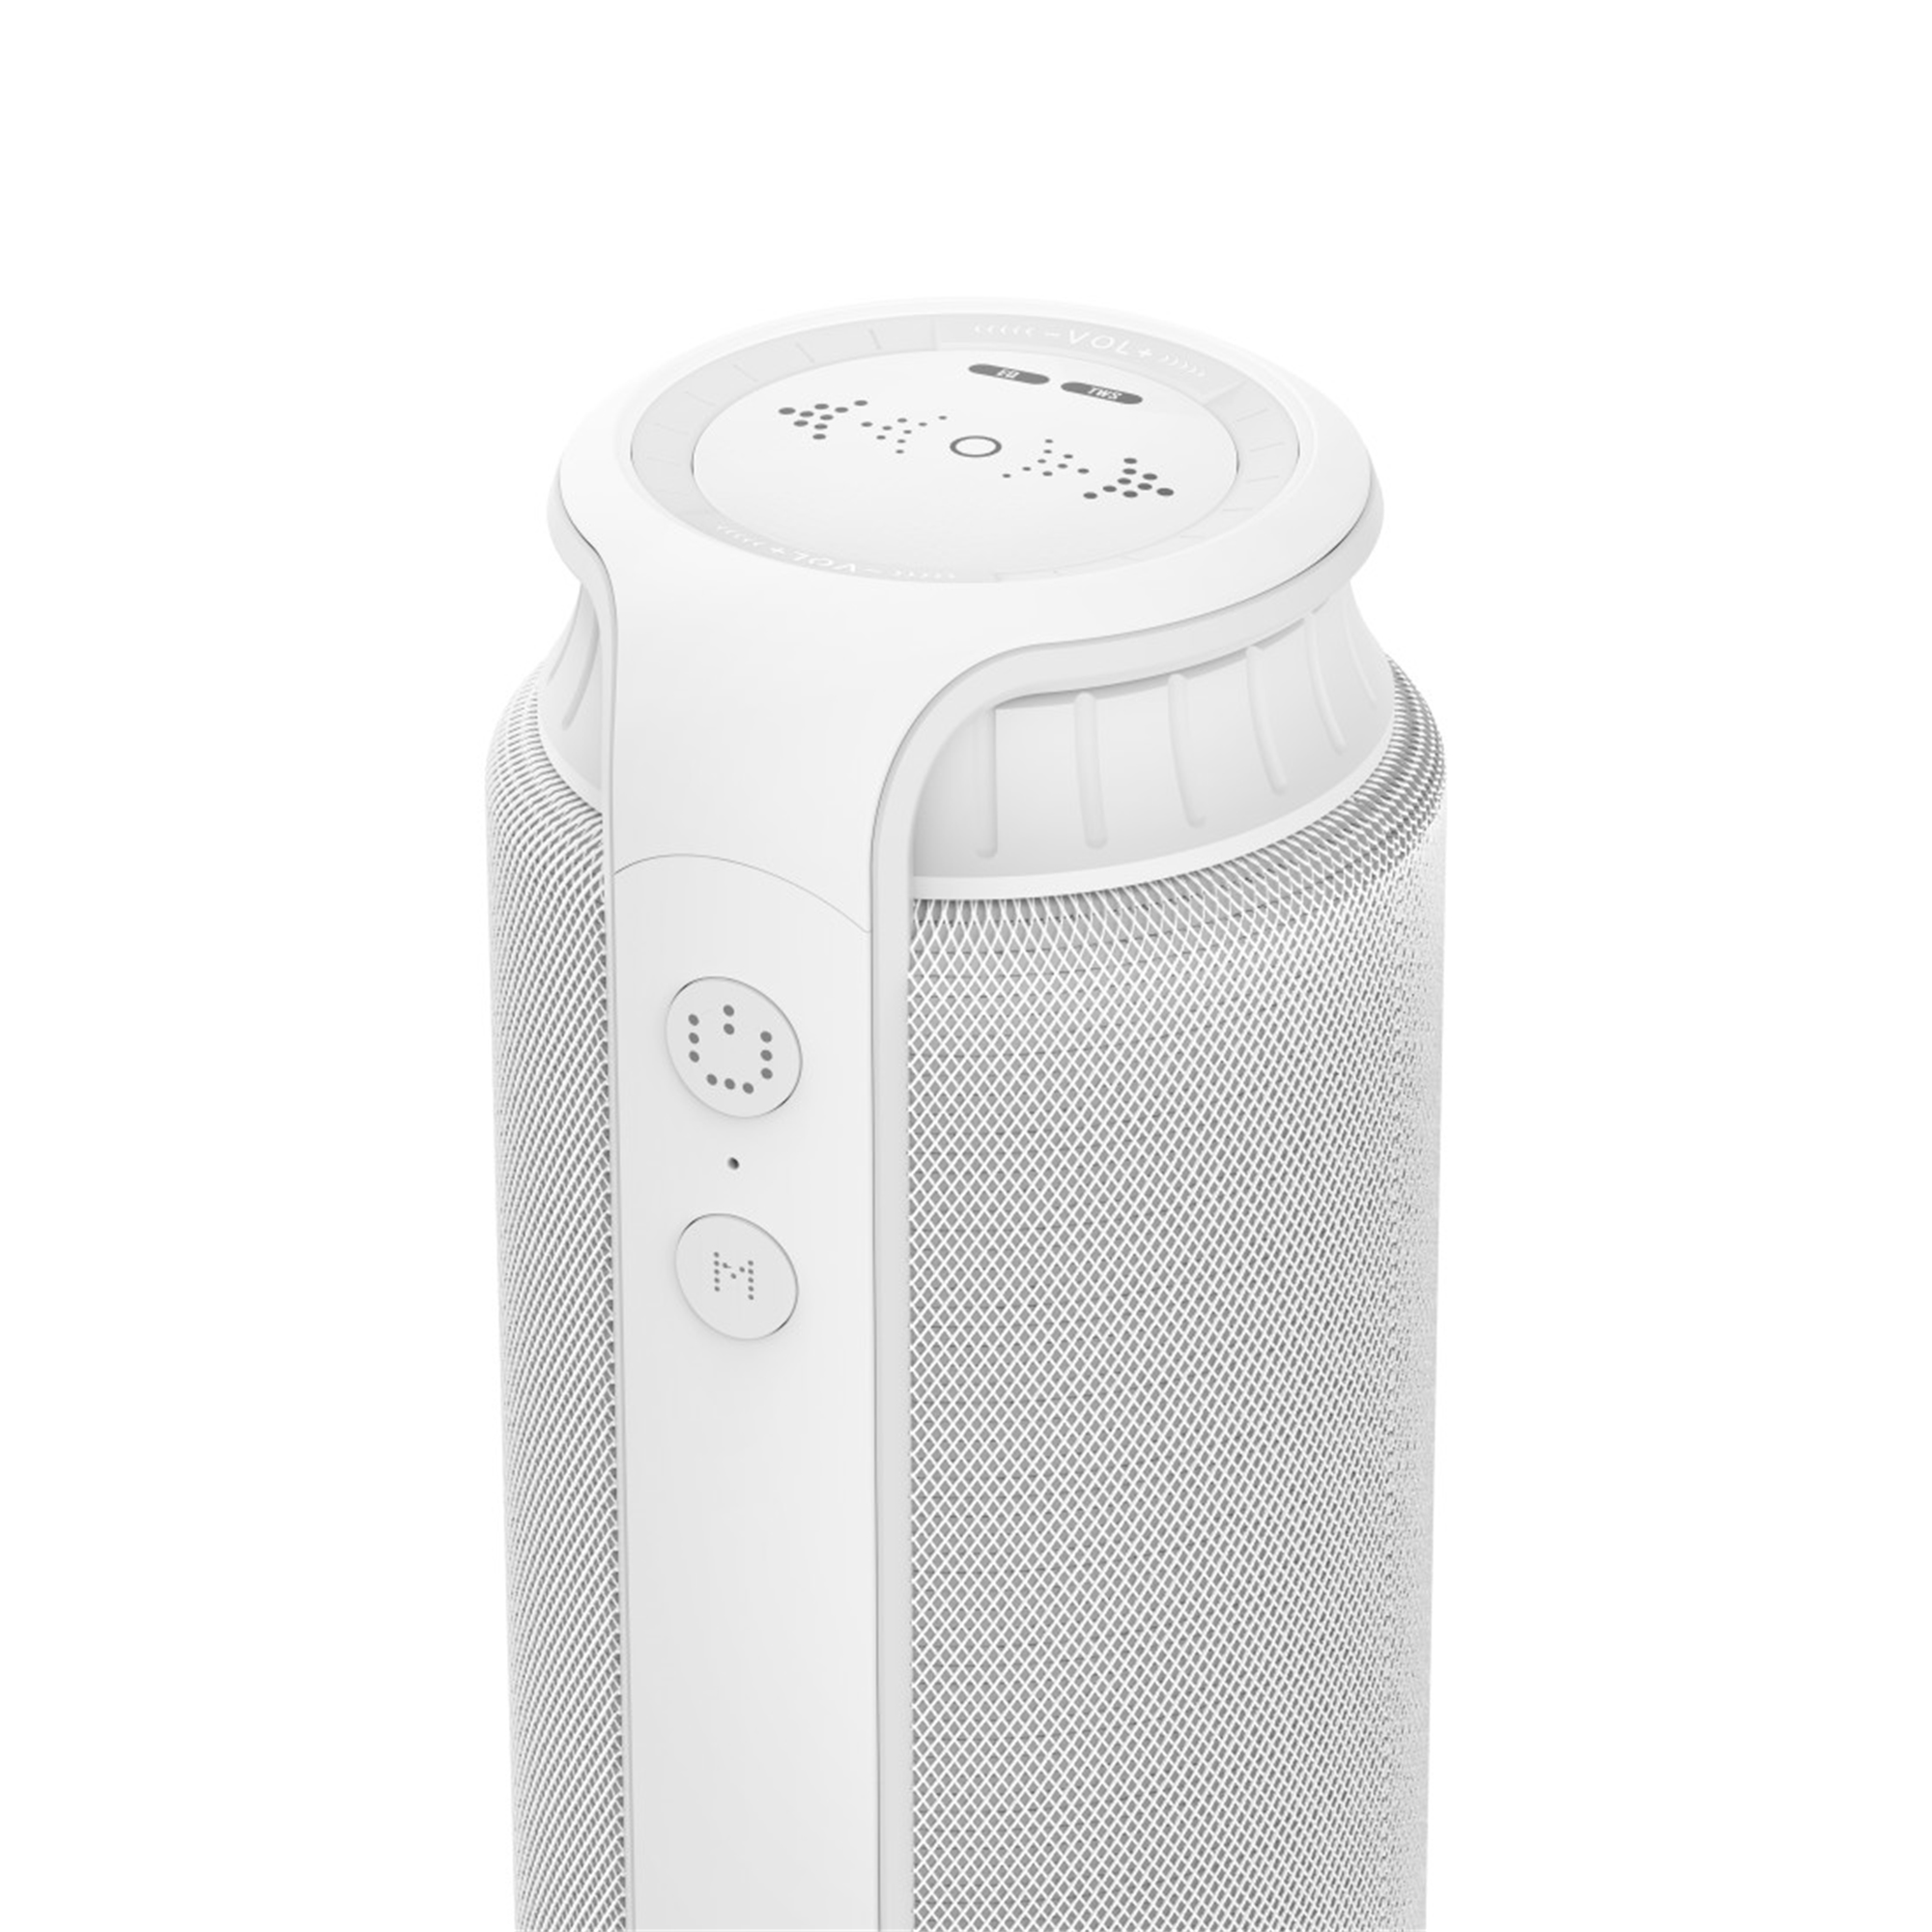 HAMA Pipe Bluetooth-Lautsprecher 2.0 (Stereo, Weiß)